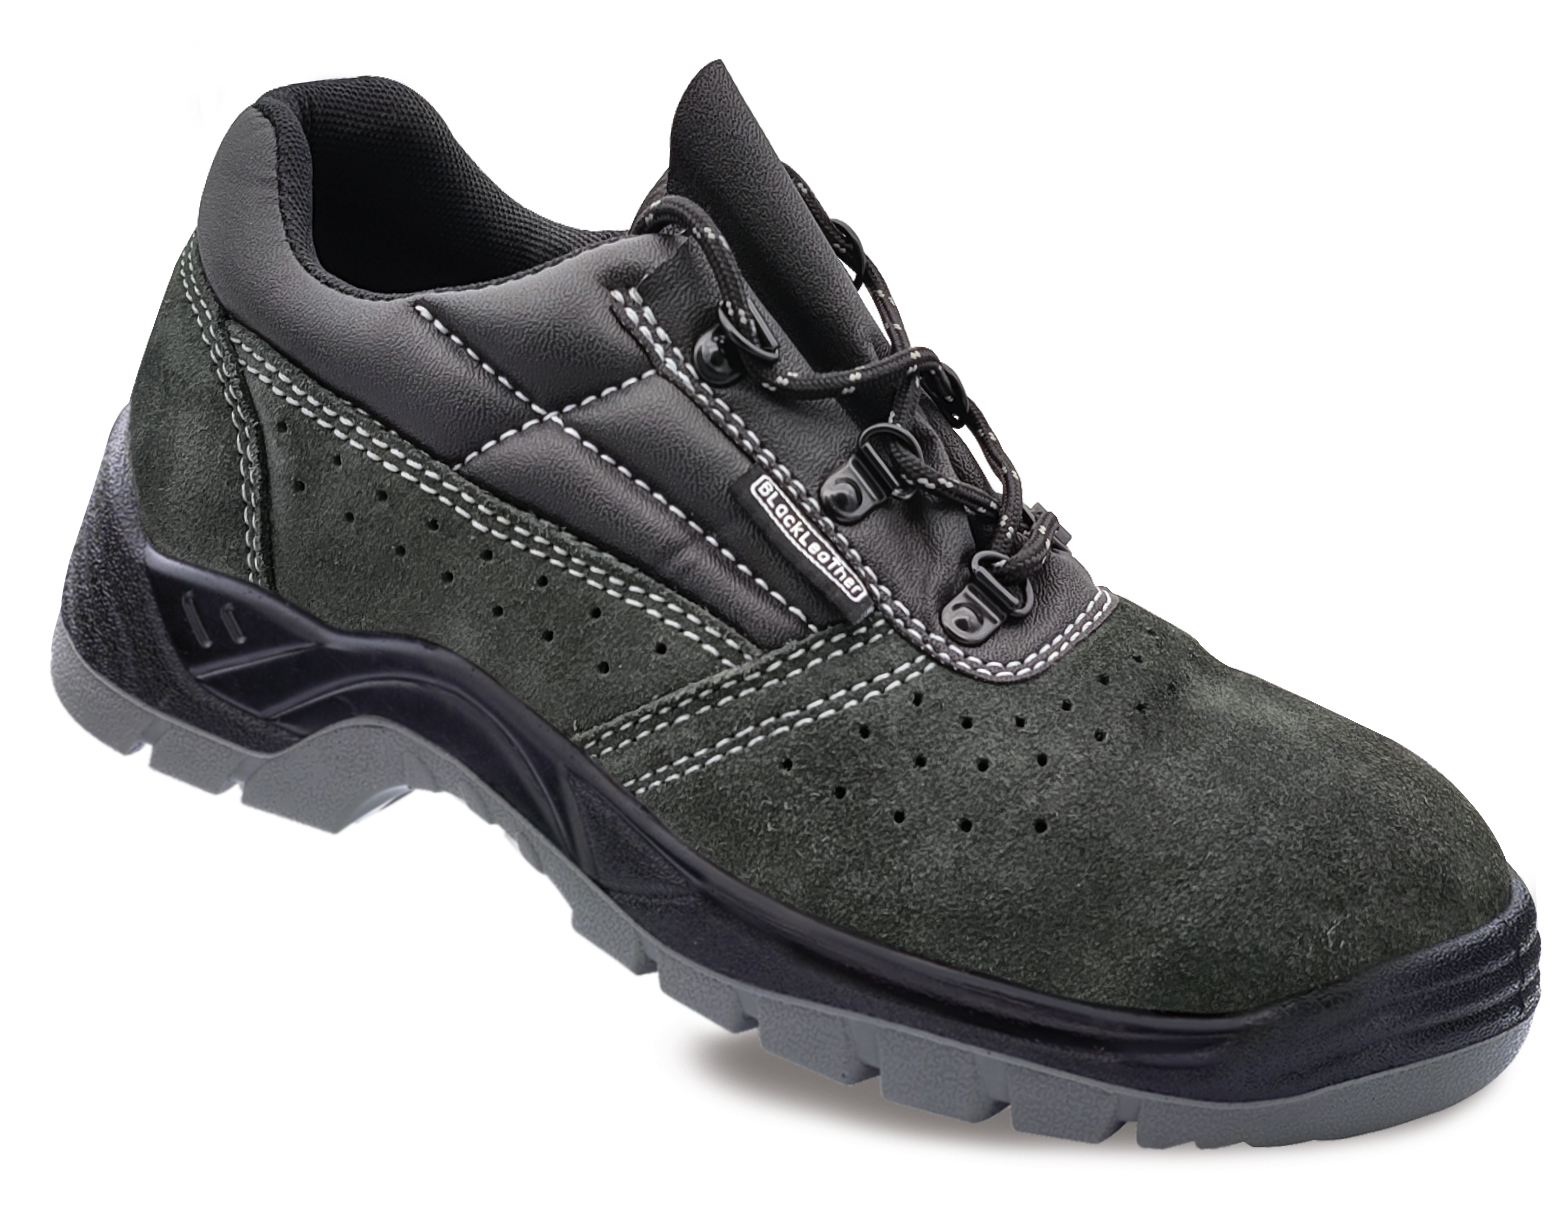 ZSECO1 Safety Footwear BlackLeather Shoe mod. ZSECO1 (S1P SRC E A)